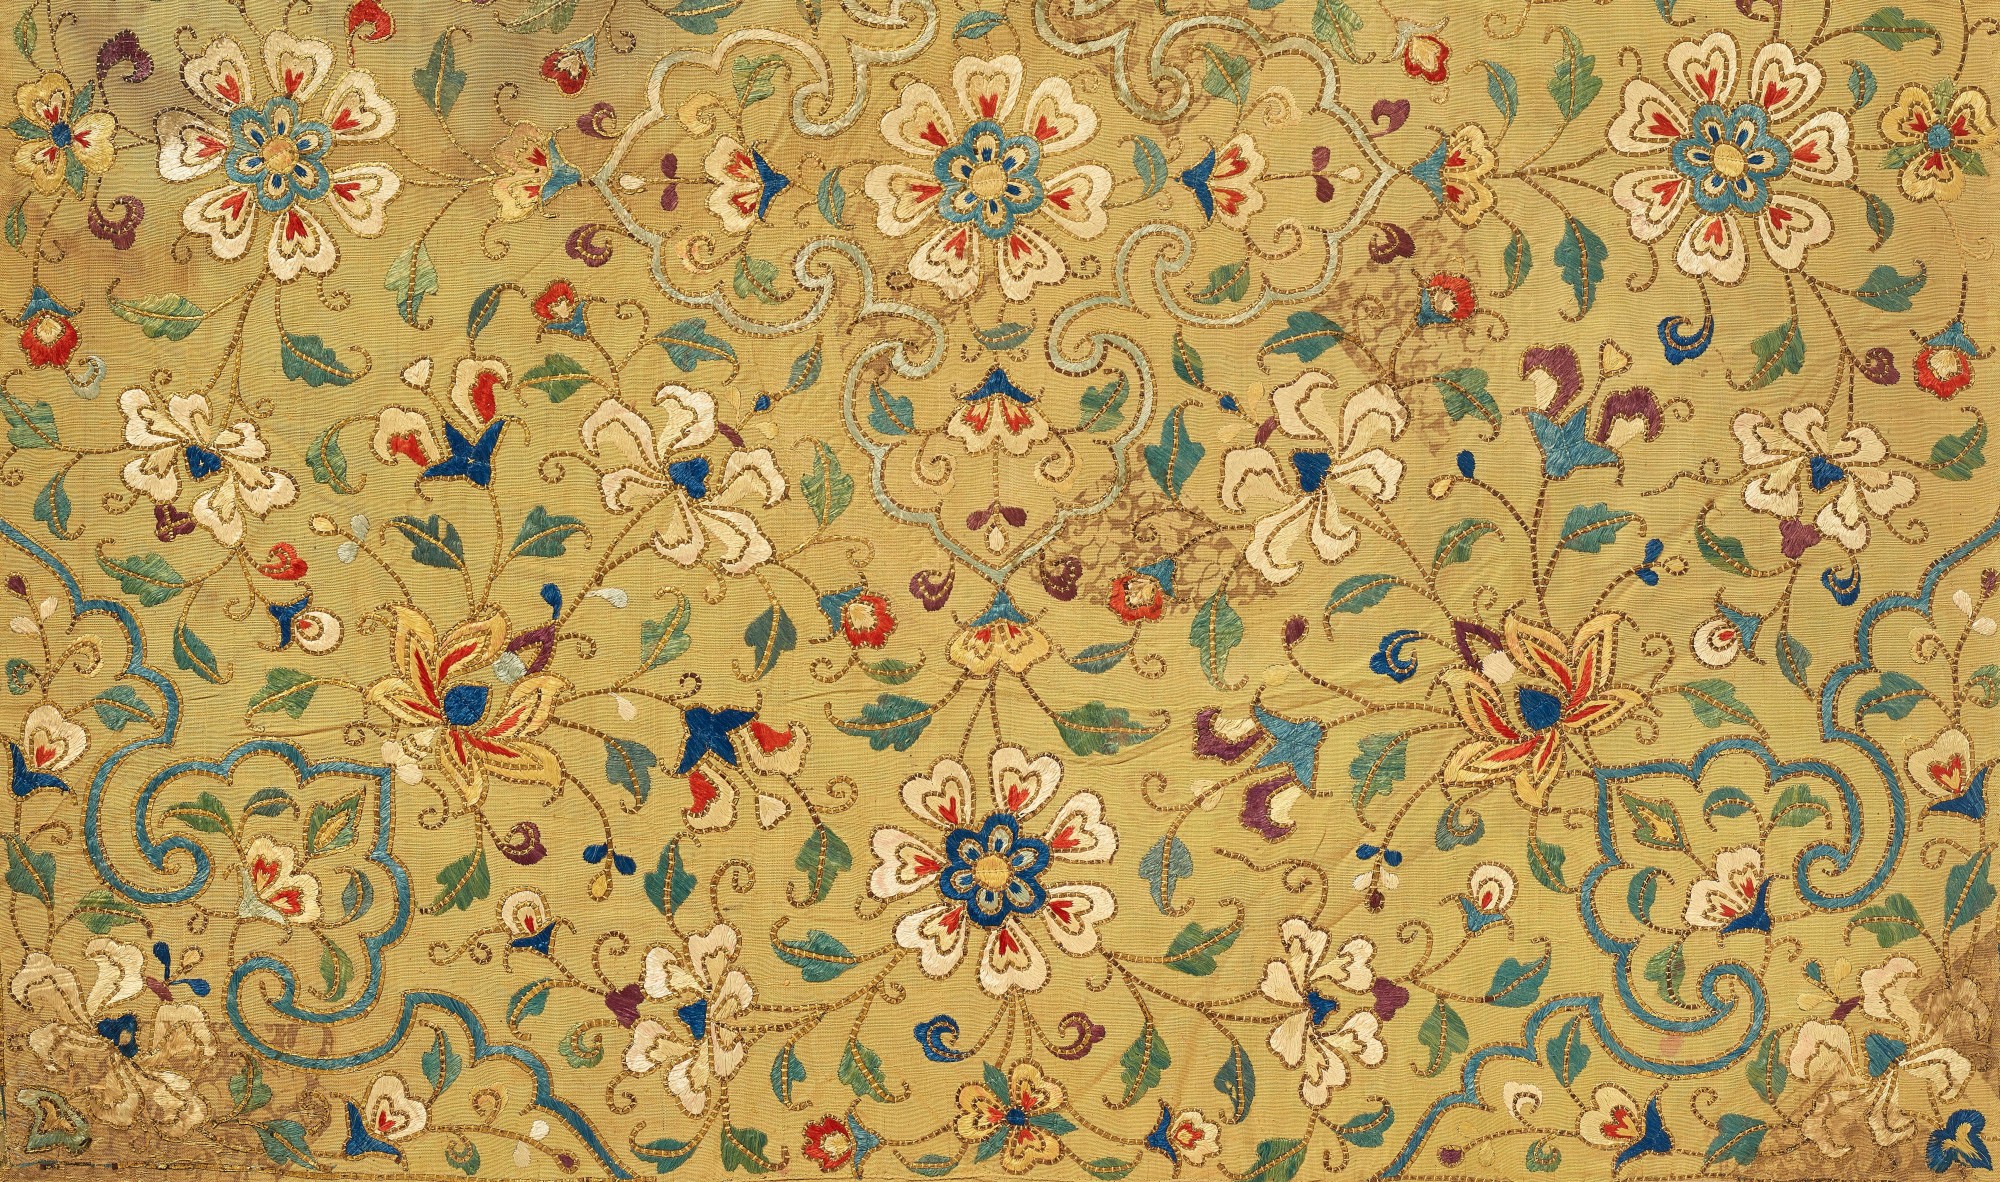 Asian & Islamic Textiles | Francesca Galloway